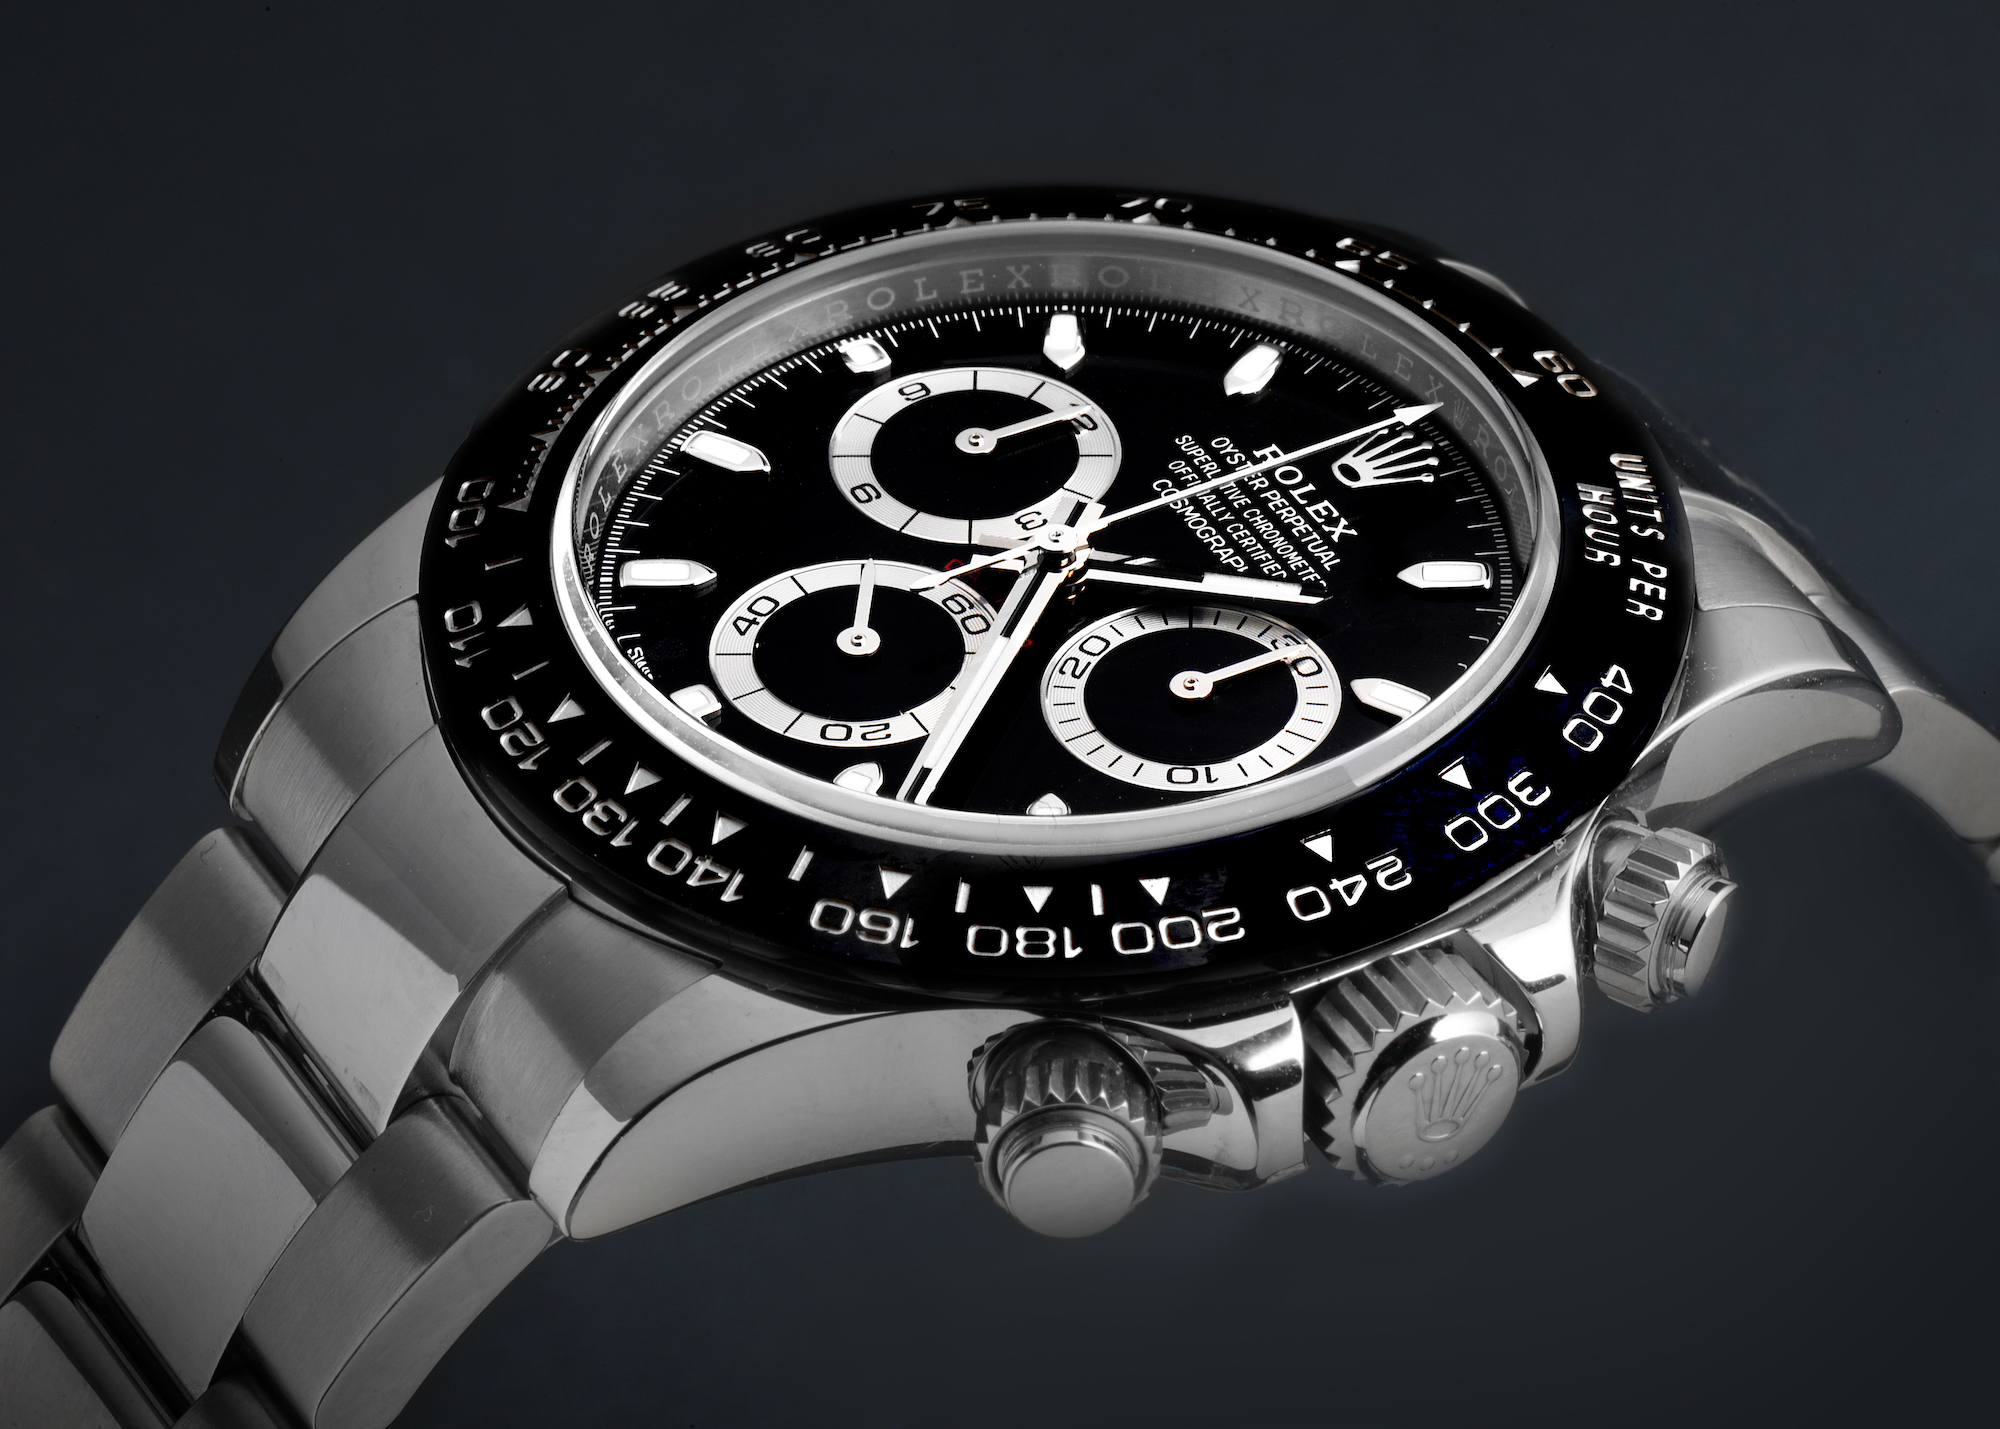 Rolex Cosmograph Daytona Ceramic Bezel Black Dial Mens Watch 116500